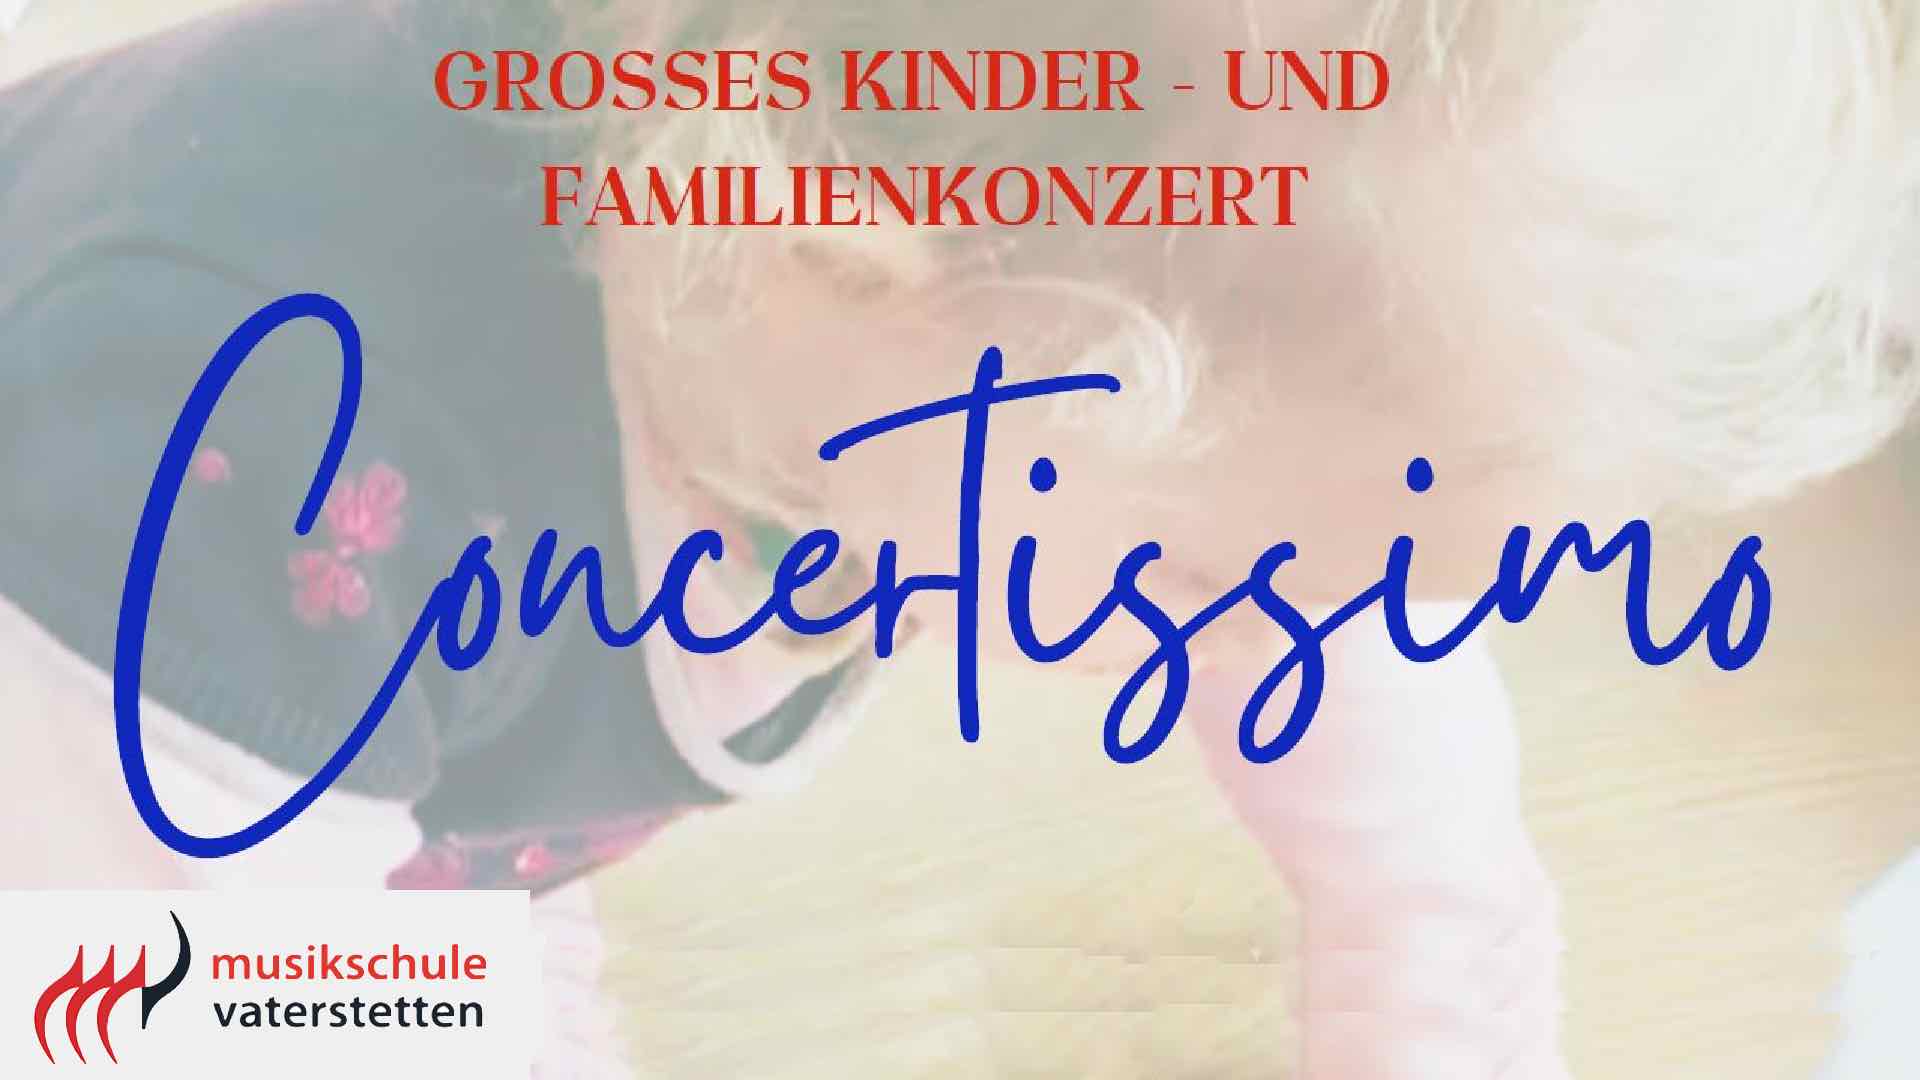 Concertissimo - Familienkonzert der Musikschule Vaterstetten